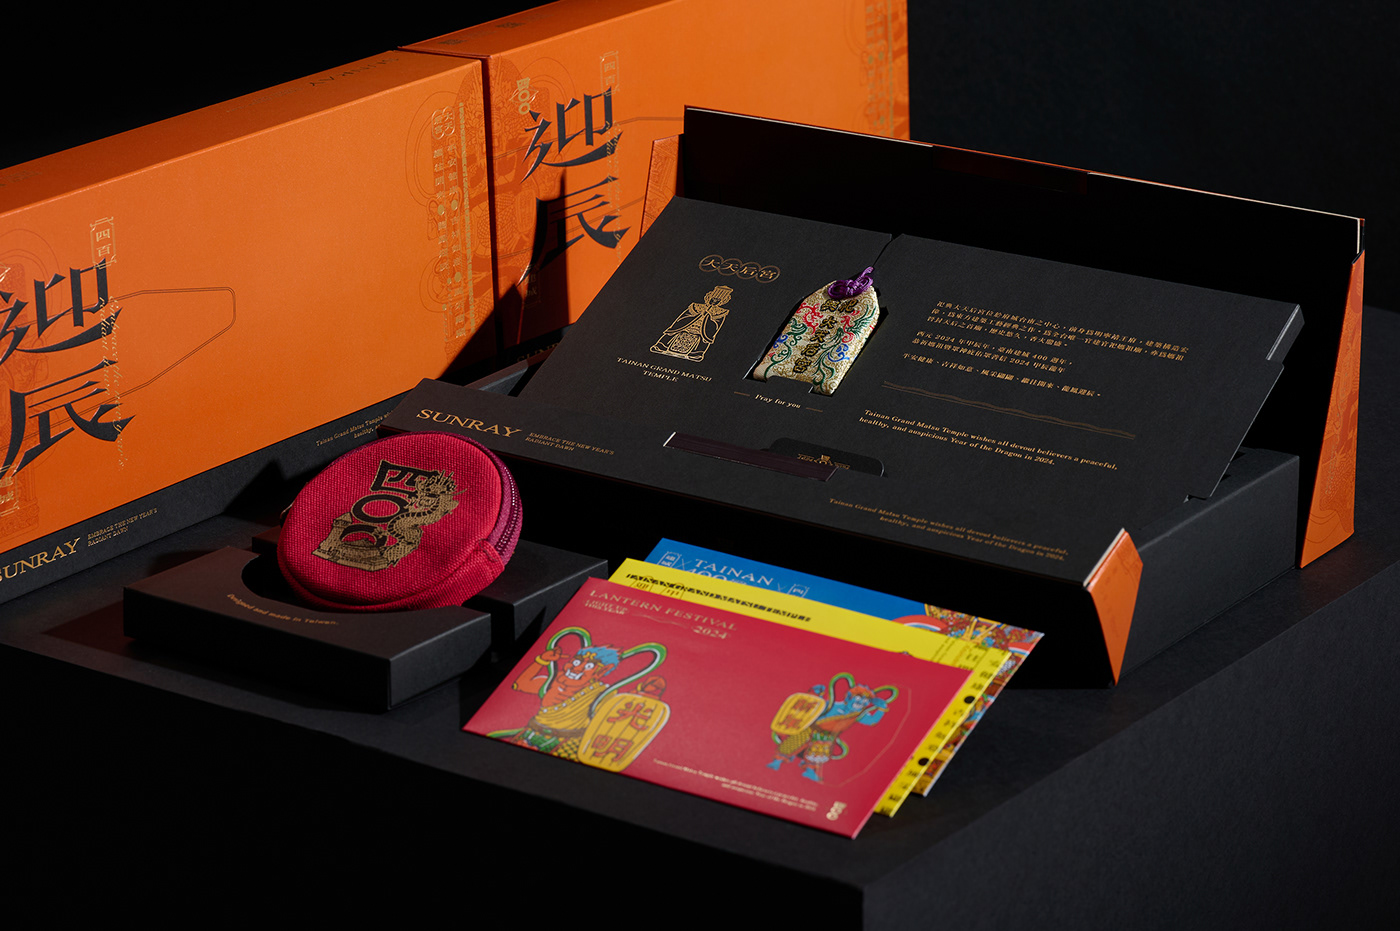 sunray 4W STUDIO Siwei Design artwork packaging design croter new year gift box 테라벳추천인코드 خيال  